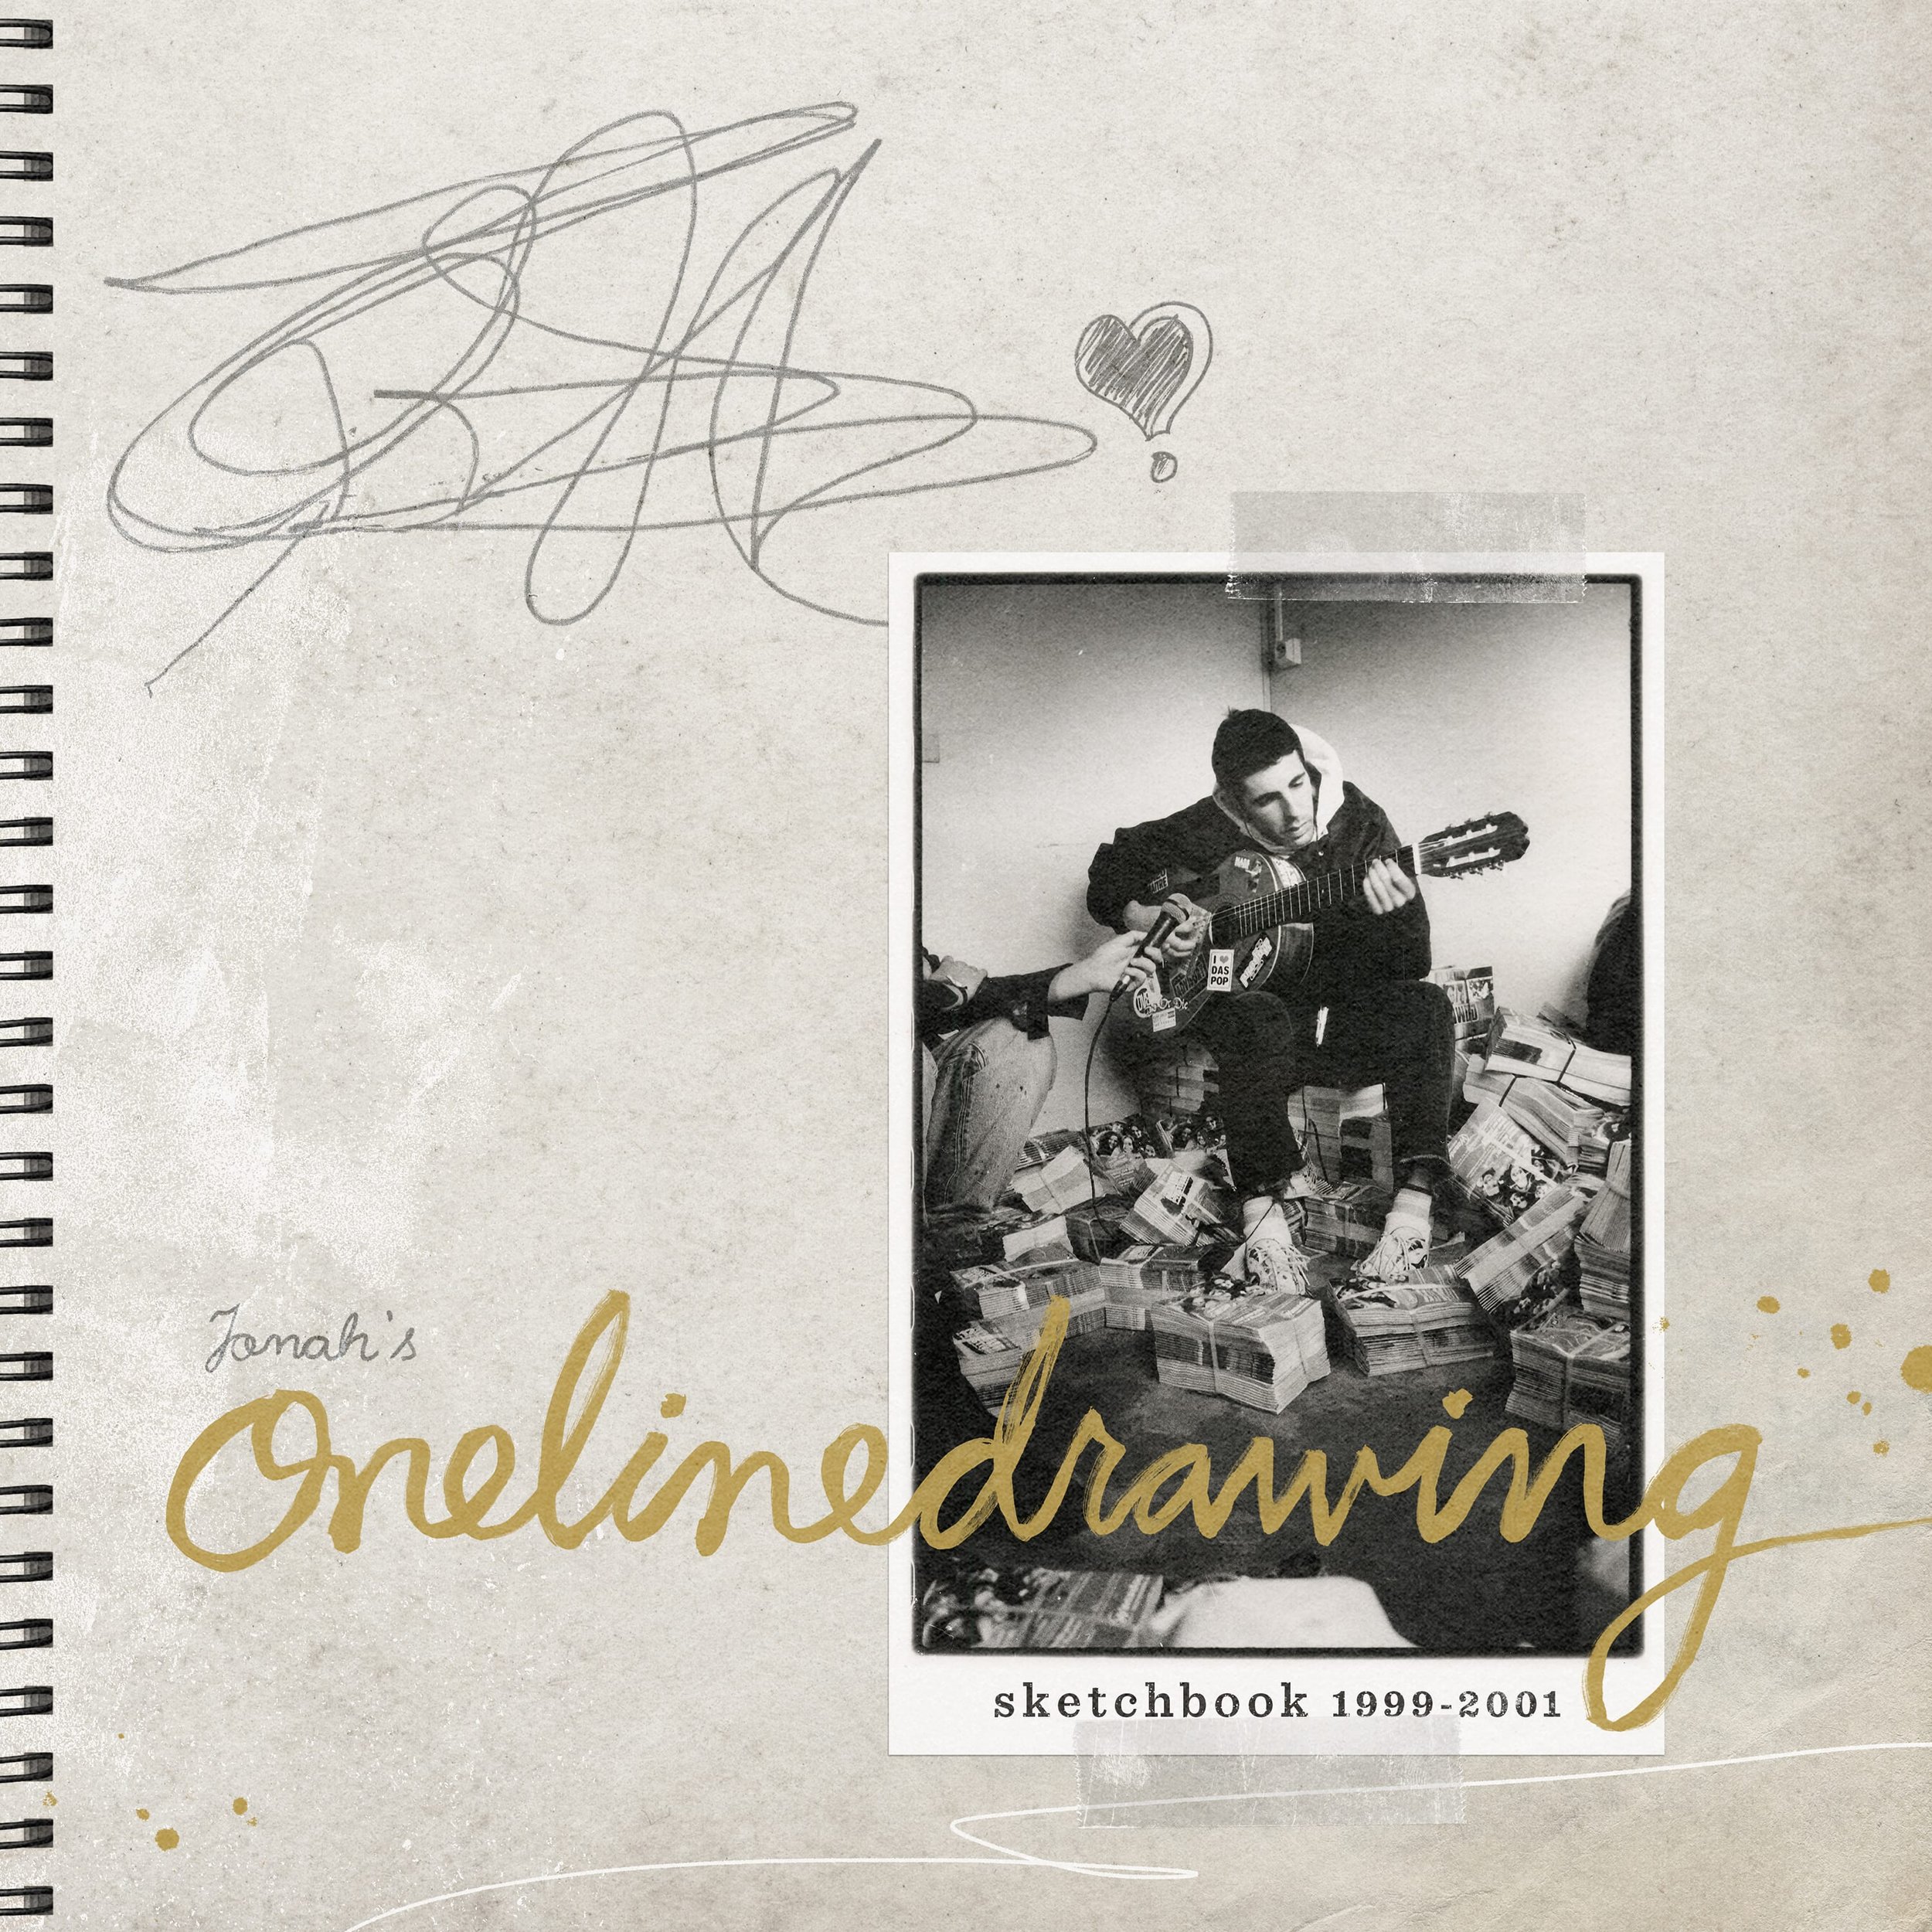 onelinedrawing - sketchbook - cover.jpg